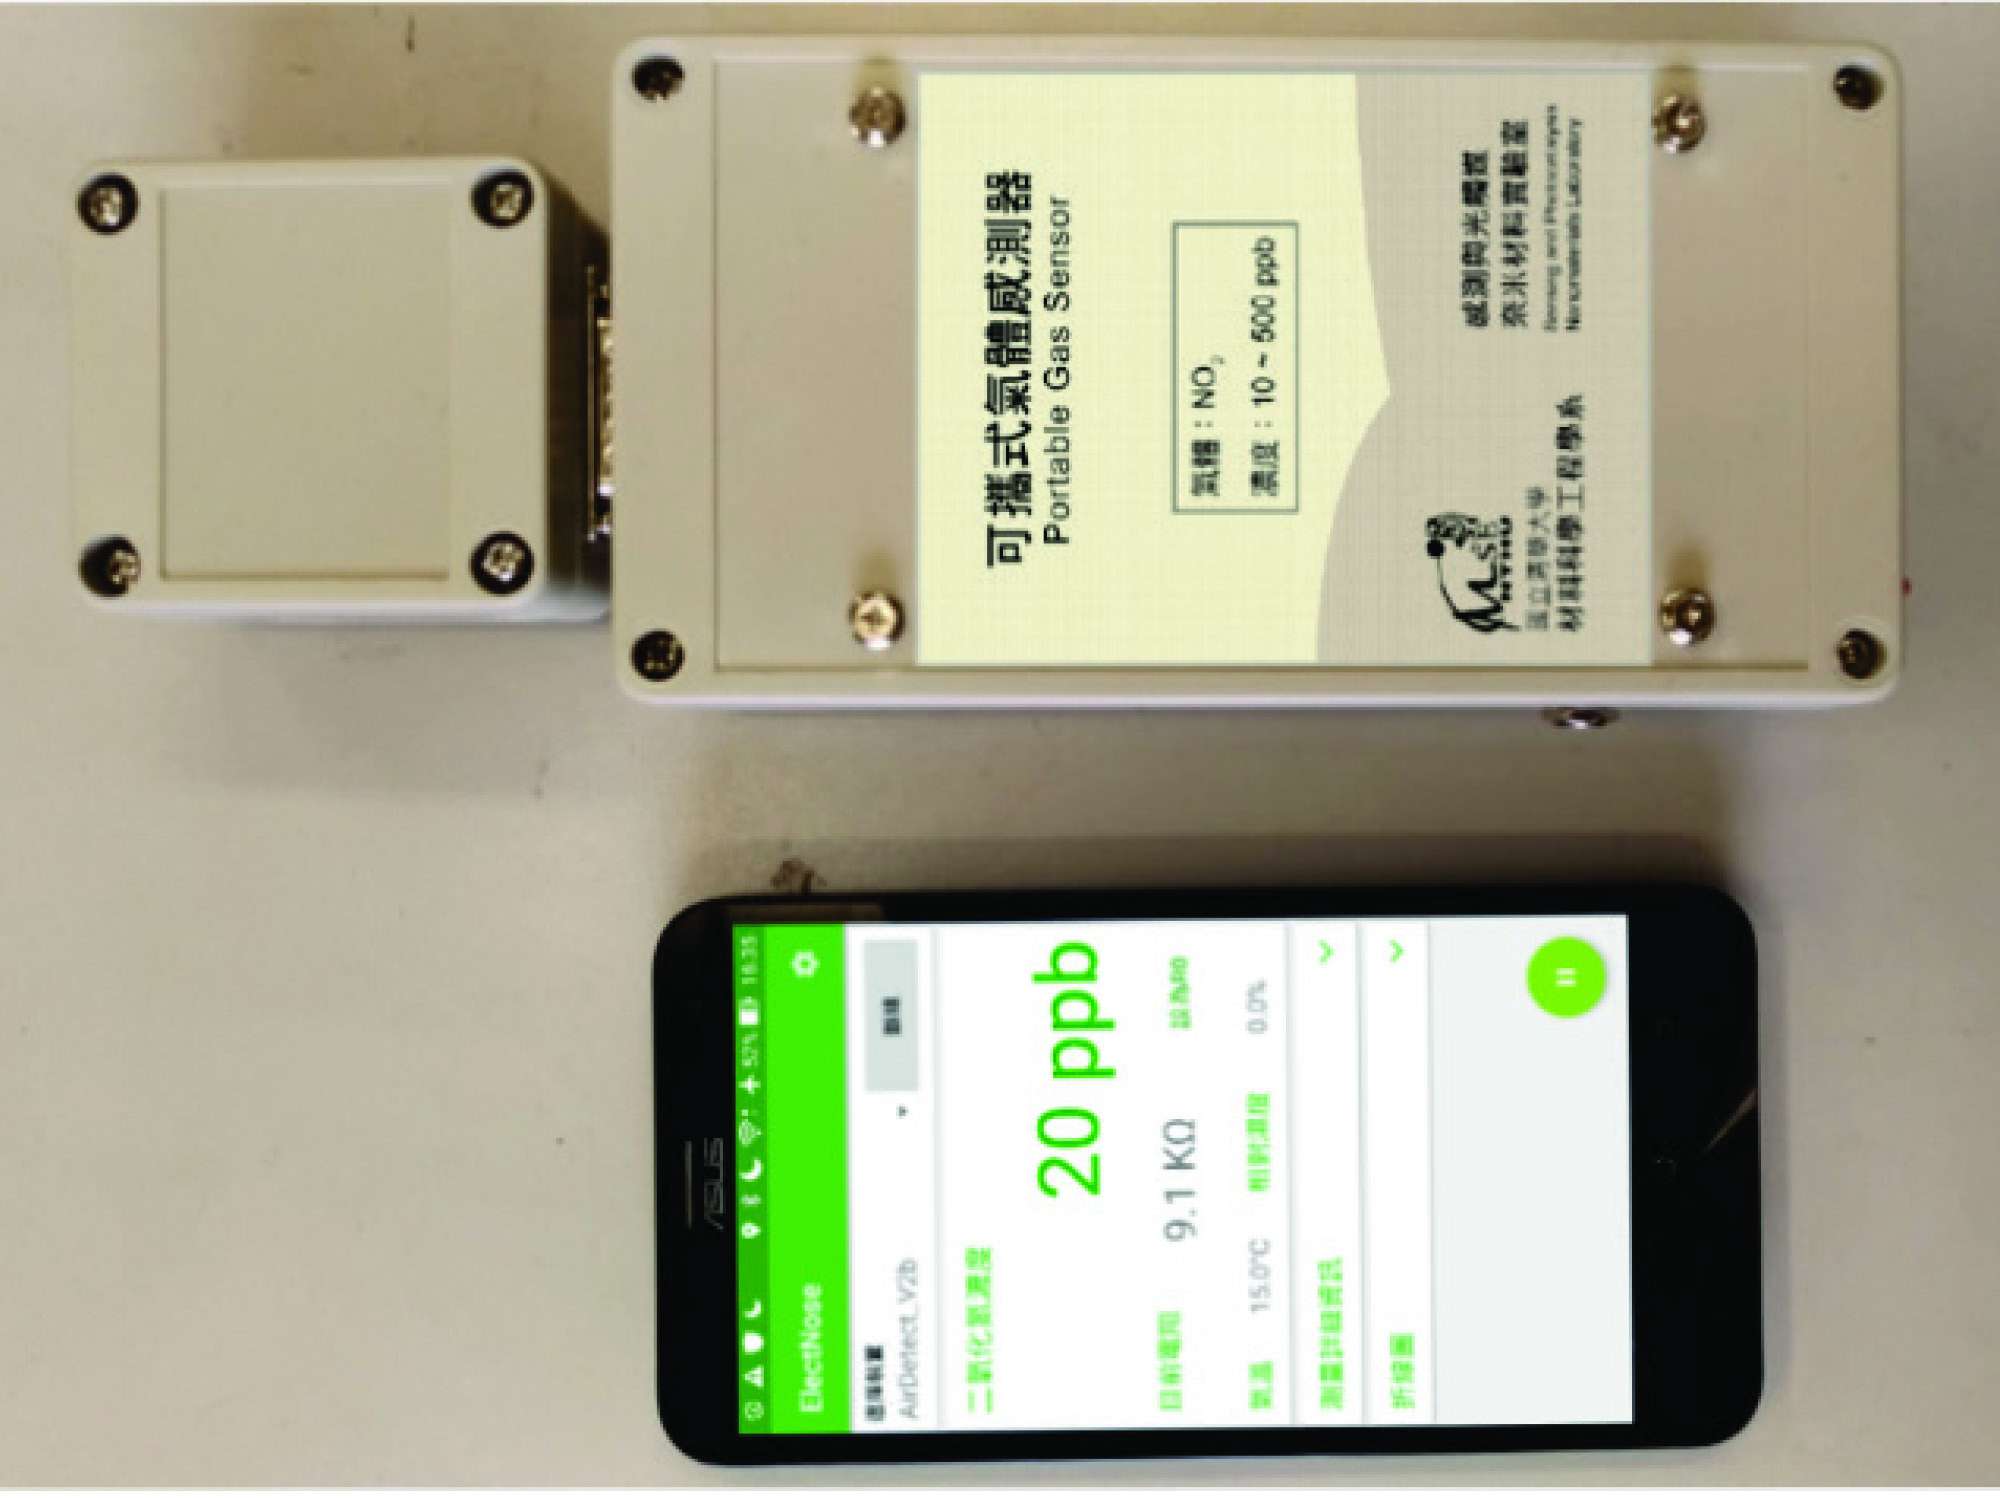 Smart phone operated portable nitrogen dioxide gas sensor